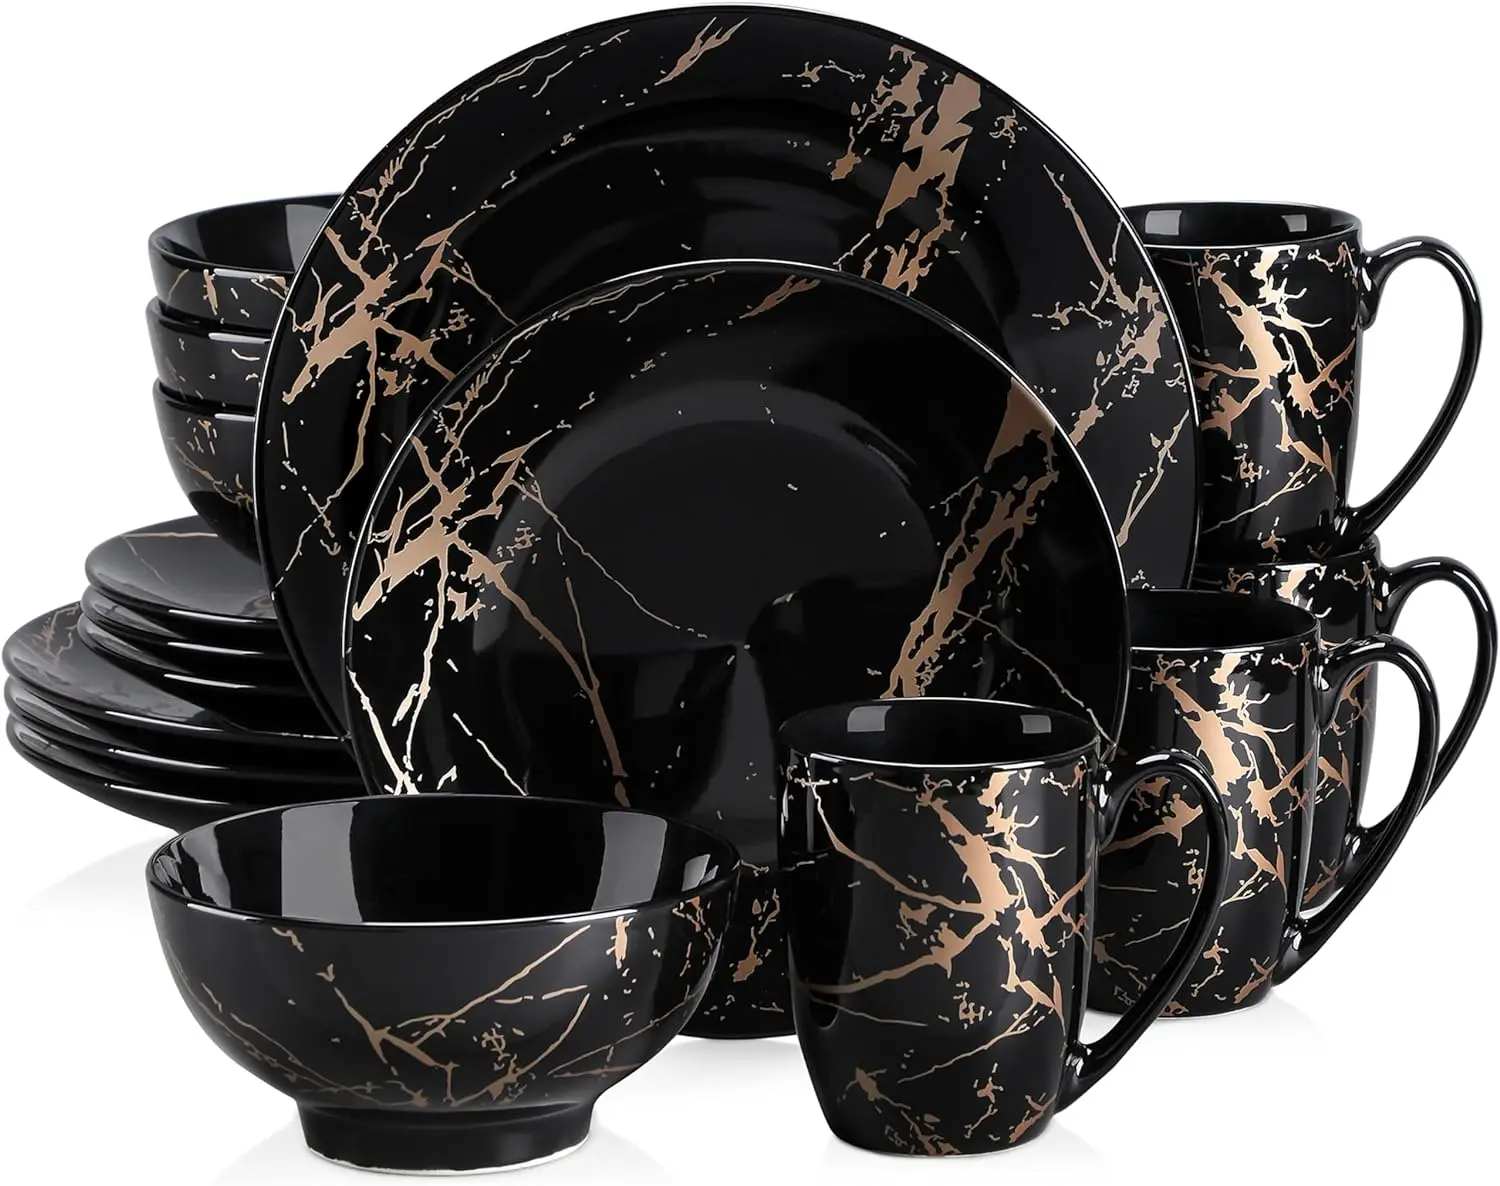 

LOVECASA Black Plates and Bowls Sets for 4, Porcelain Dinnerware Sets 16 Piece Gold Splash Glaze Ceramic Dish Set, Round Dinner